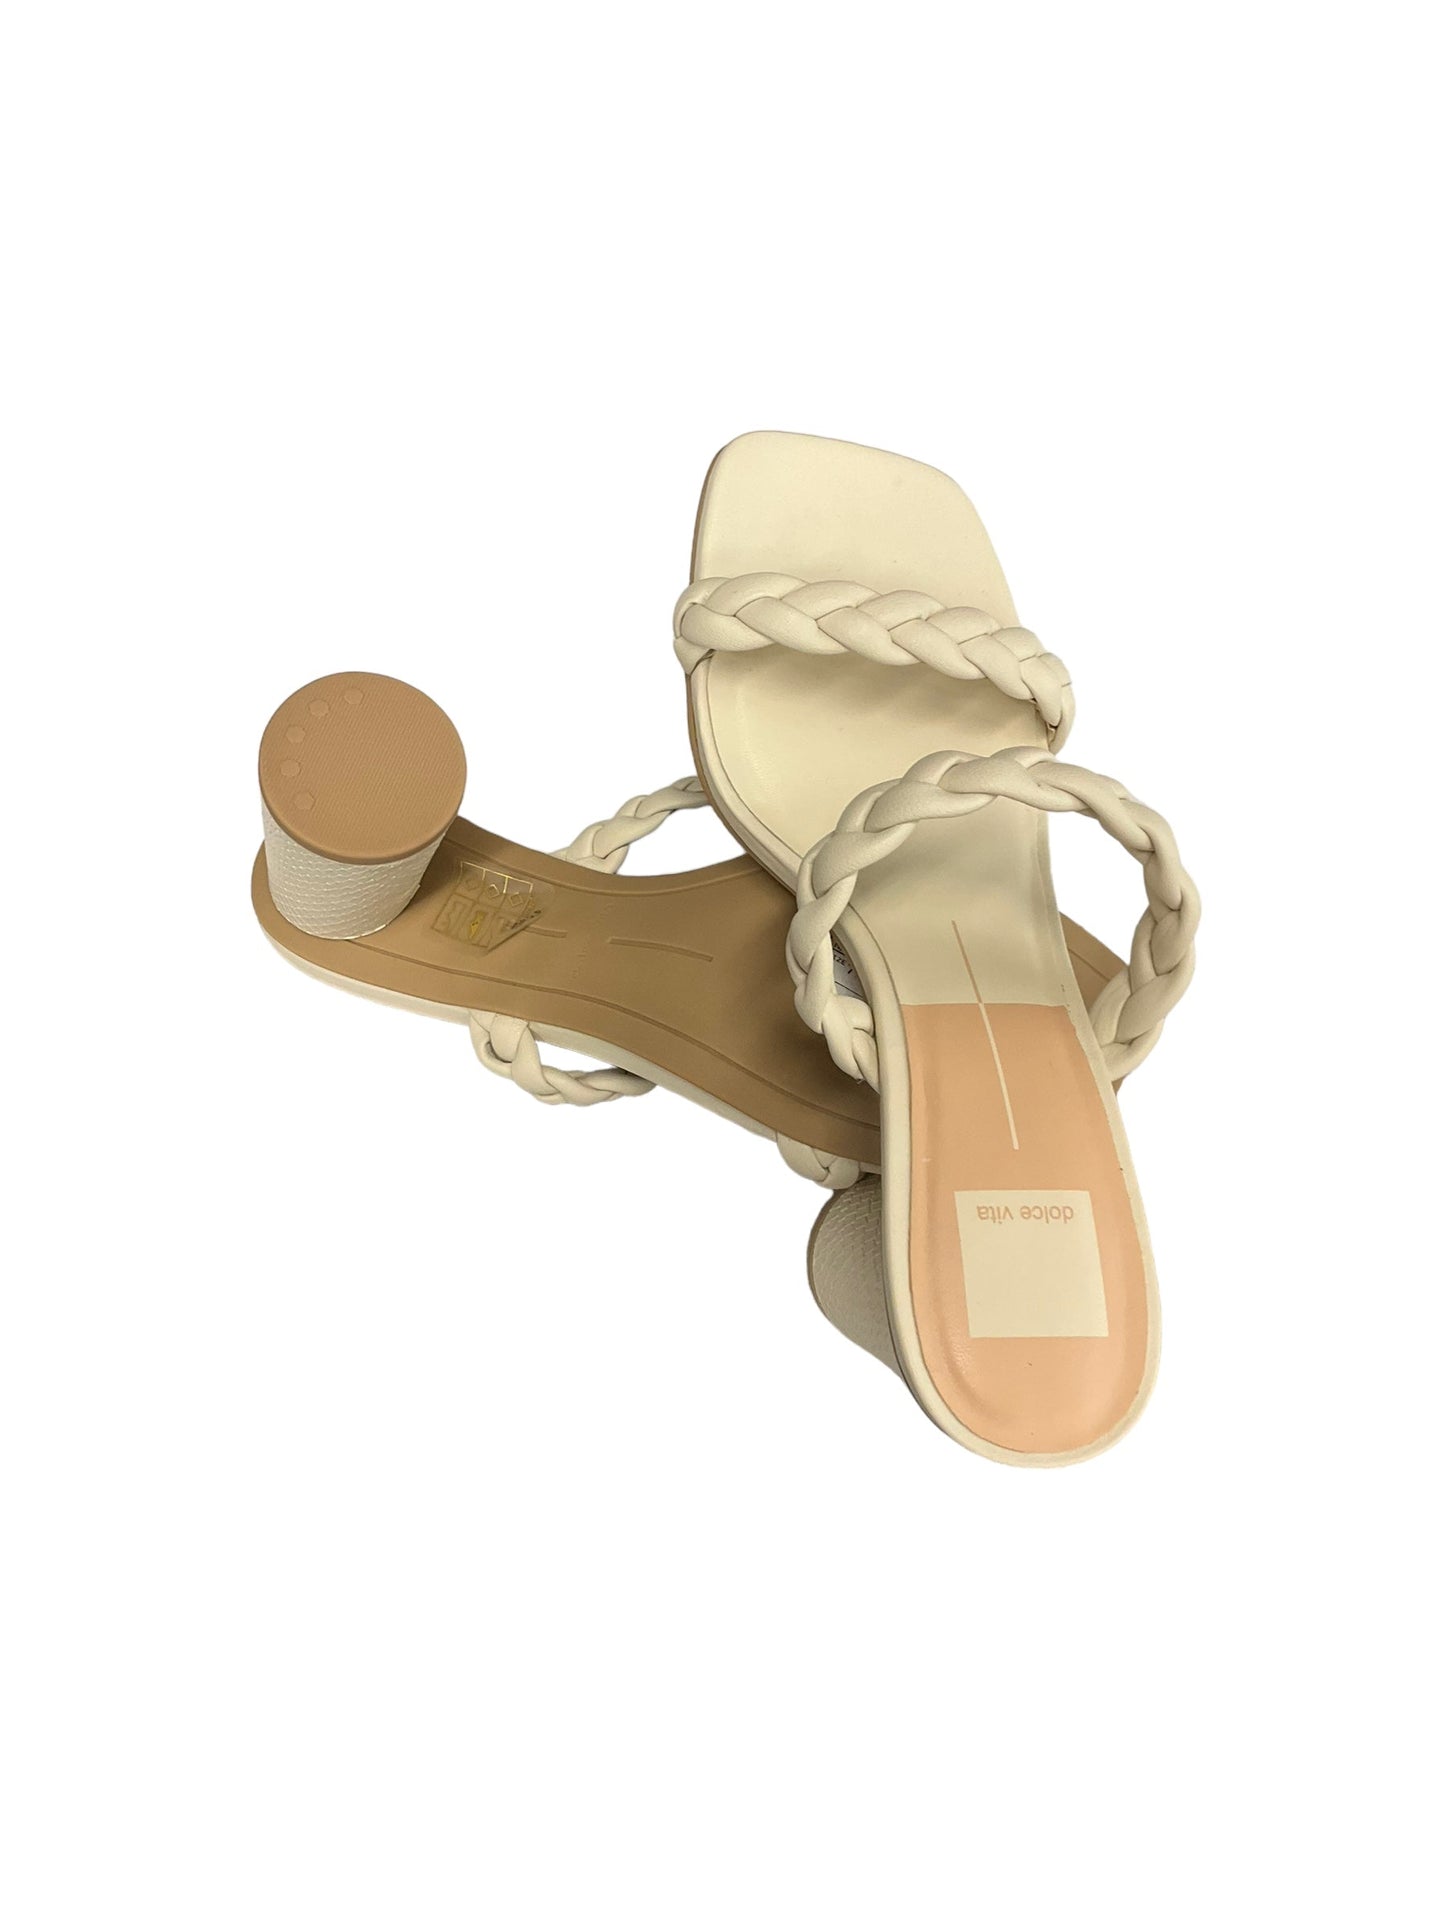 Cream Shoes Heels Block Dolce Vita, Size 7.5